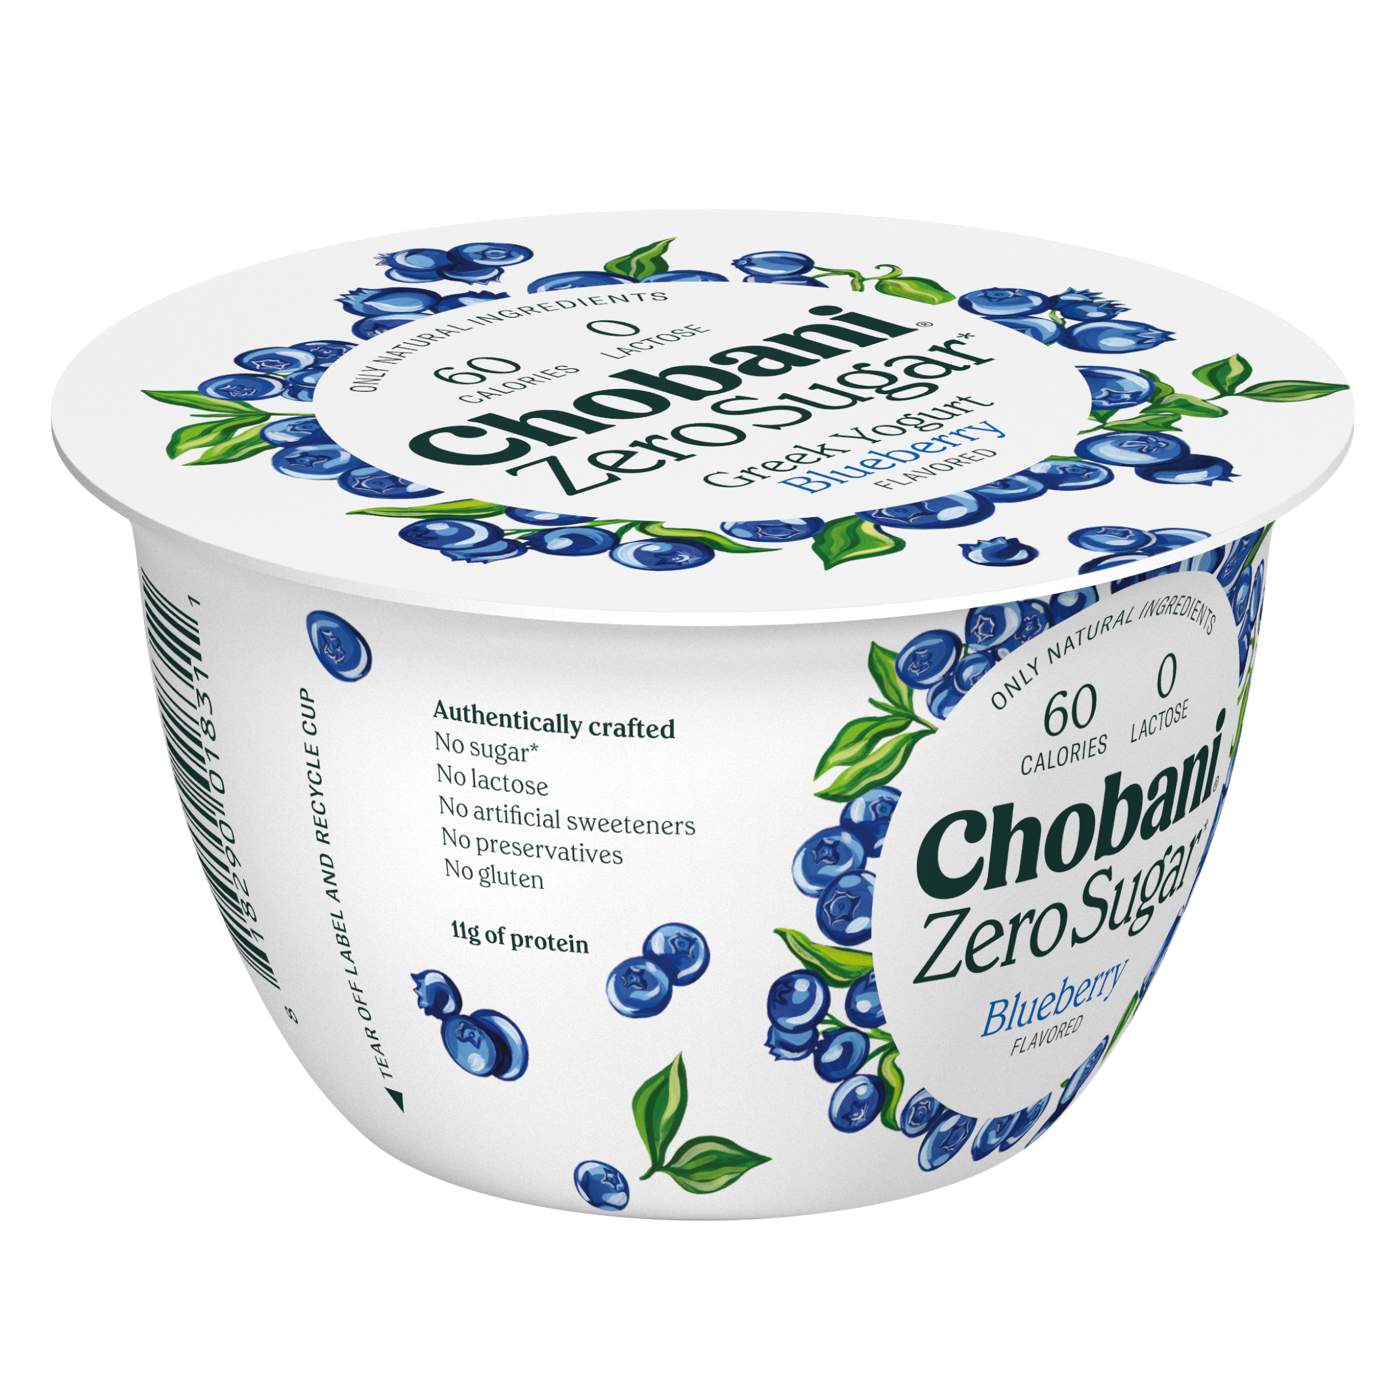 Chobani Zero Sugar Blueberry Yogurt; image 6 of 6